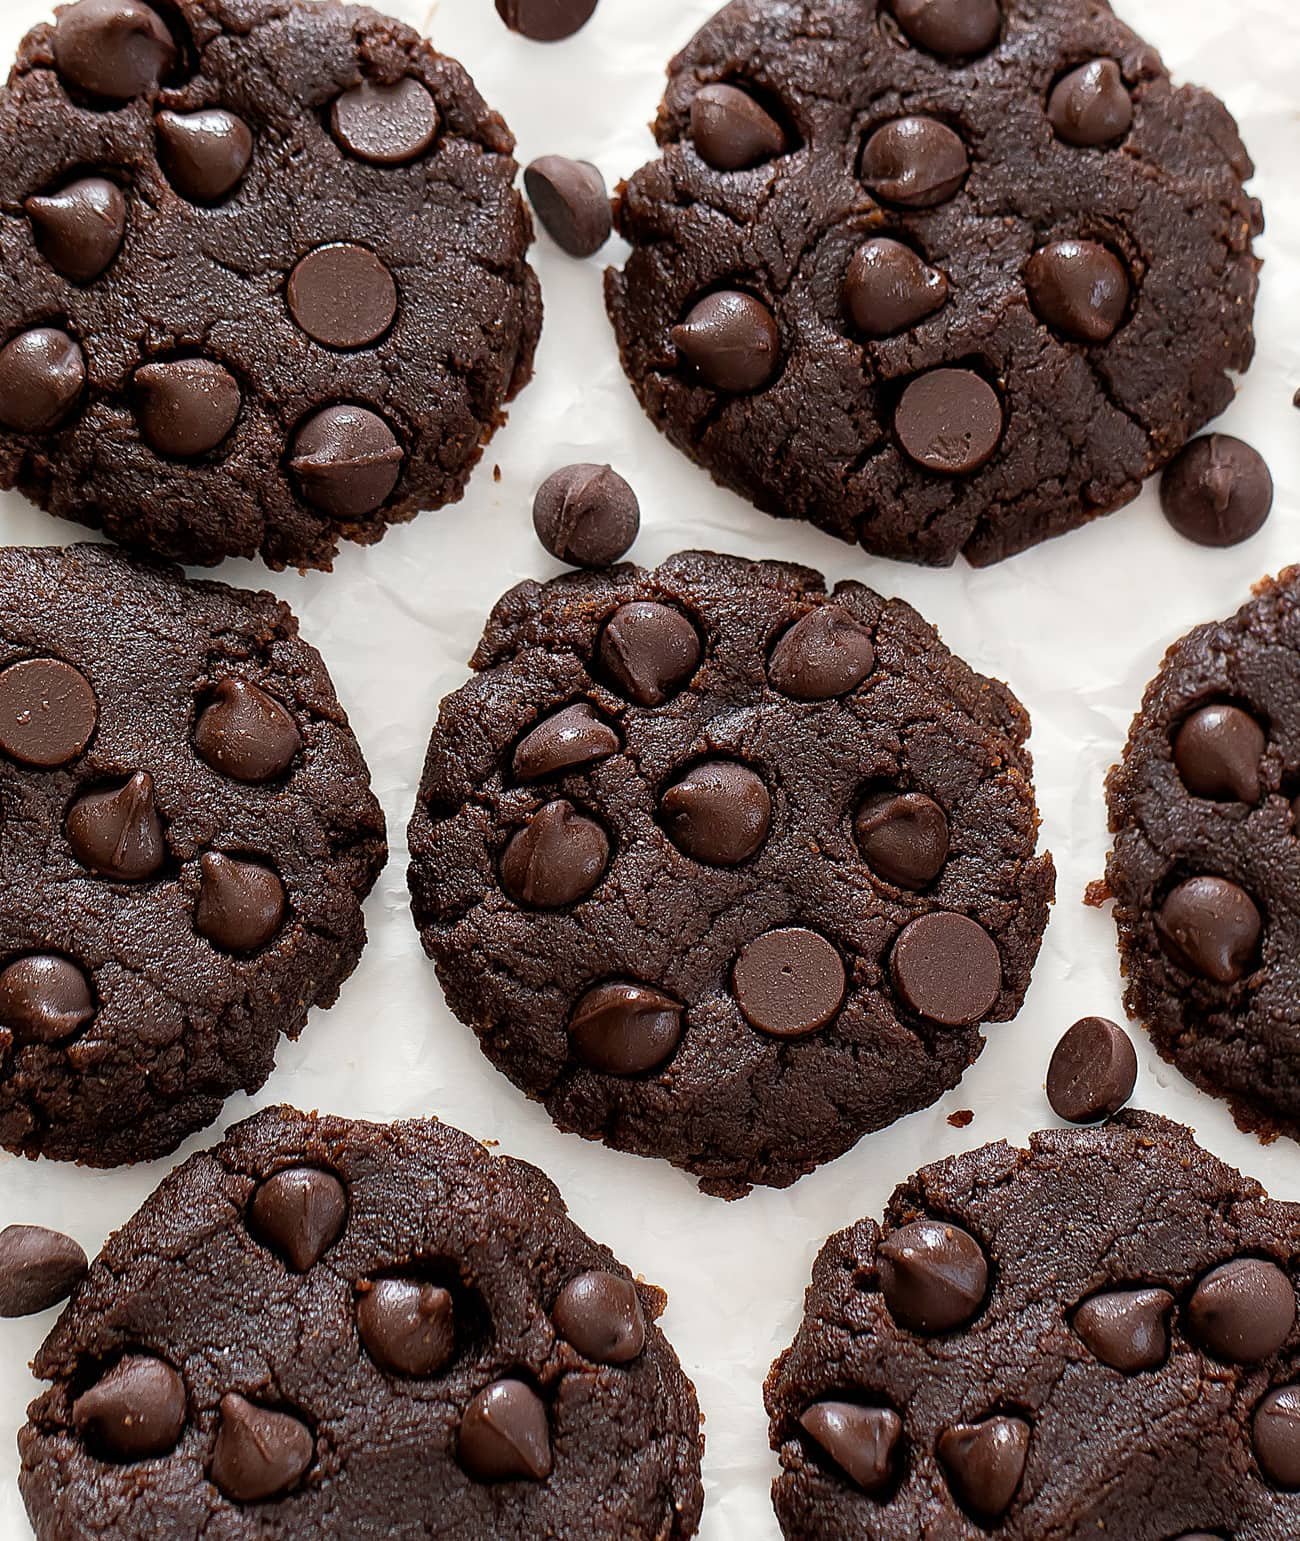 Печенье cookies с шоколадом. Кукис печенье шоколадное. Кукис шоколадный с шоколадом. Вольфганга пака шоколадные печенья. Печенье кукис с шоколадом cookies.